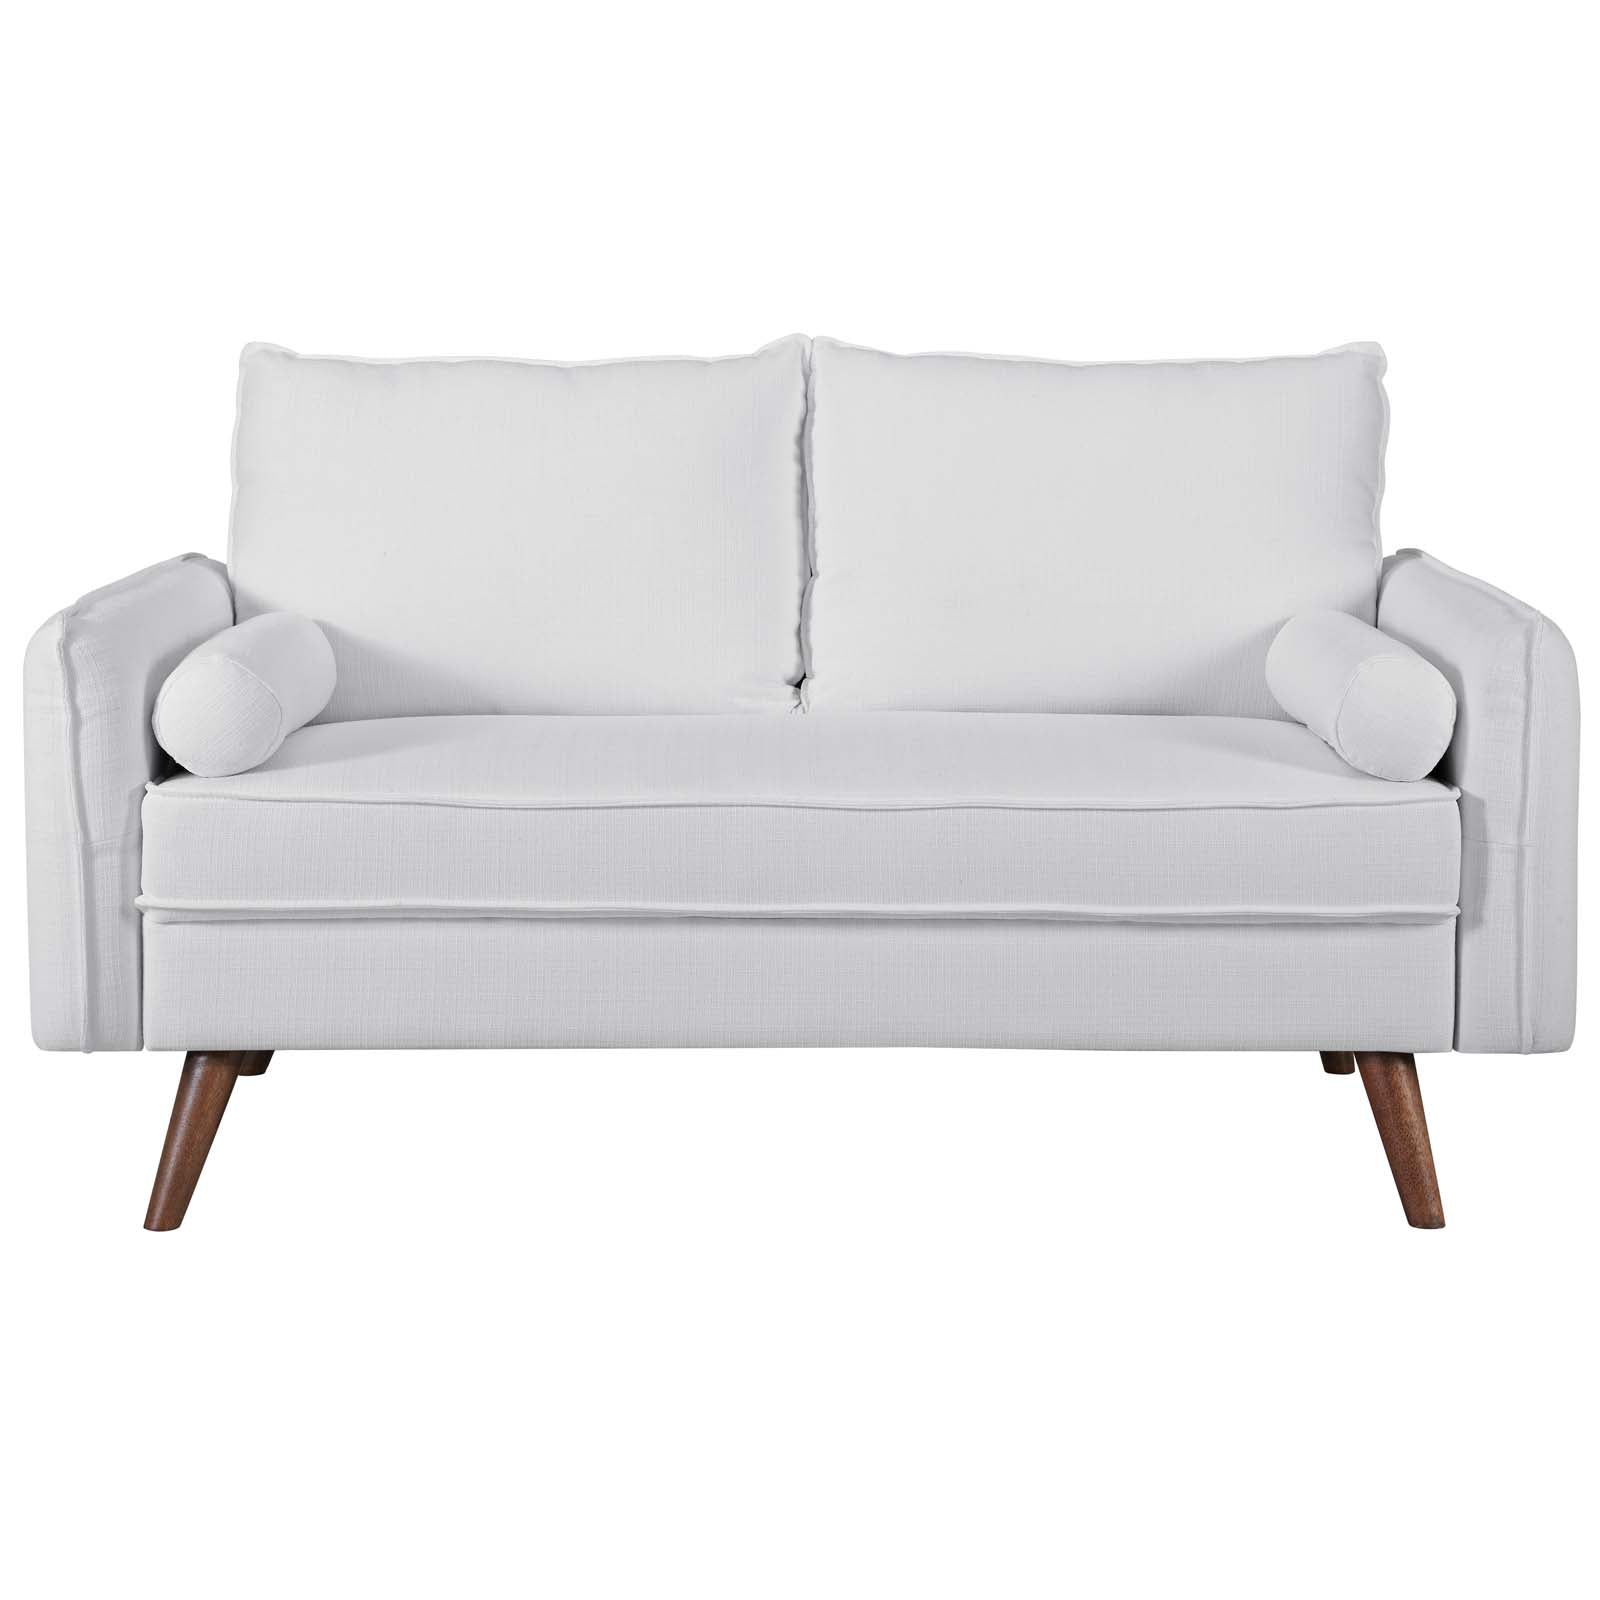 Modway Loveseats - Revive Upholstered Fabric Loveseat White